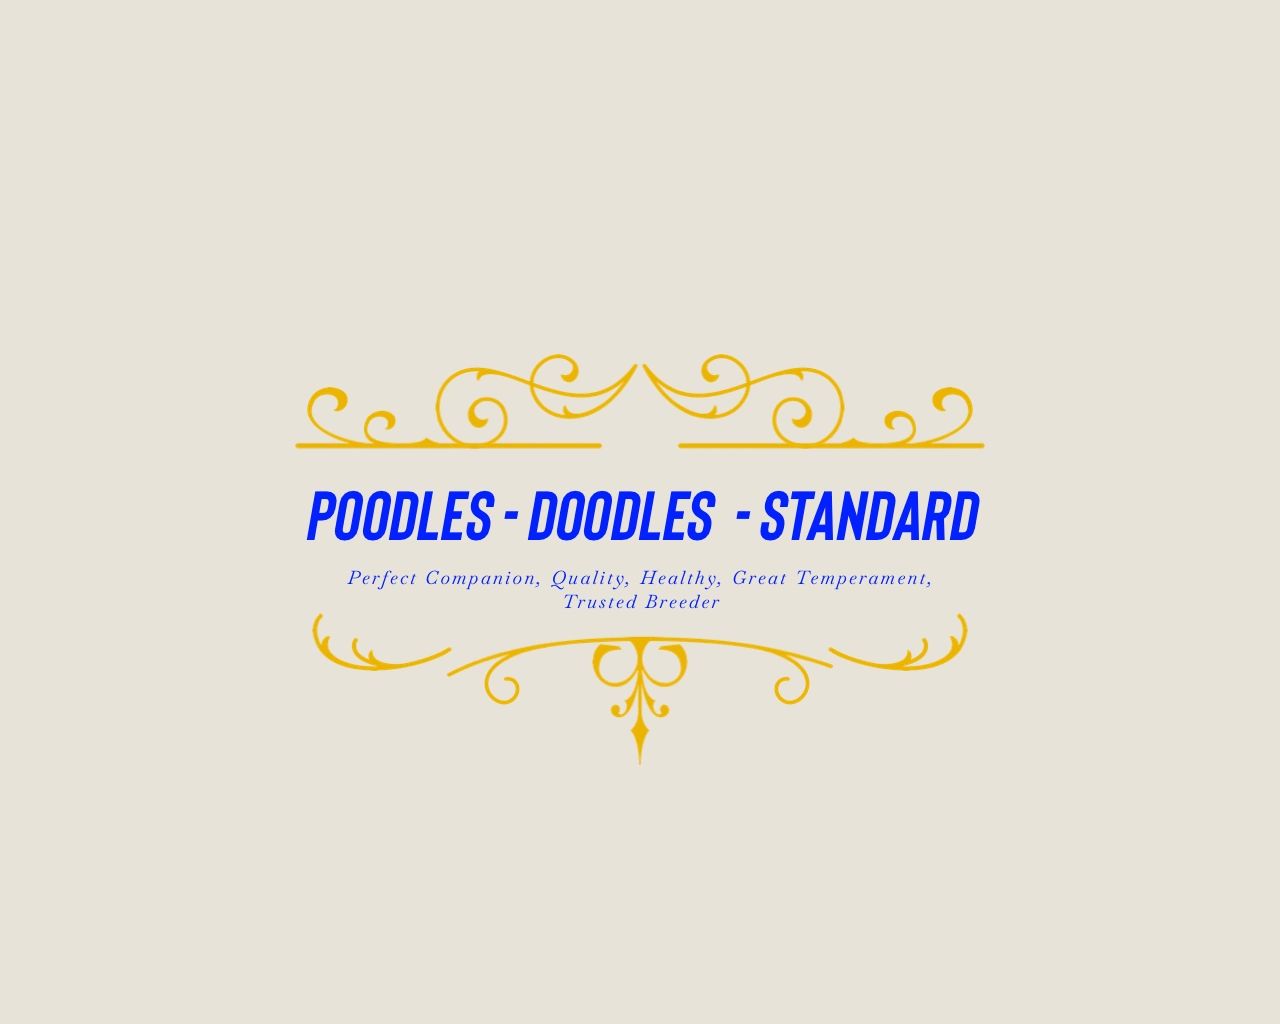 poodlesdoodlesstandard.com